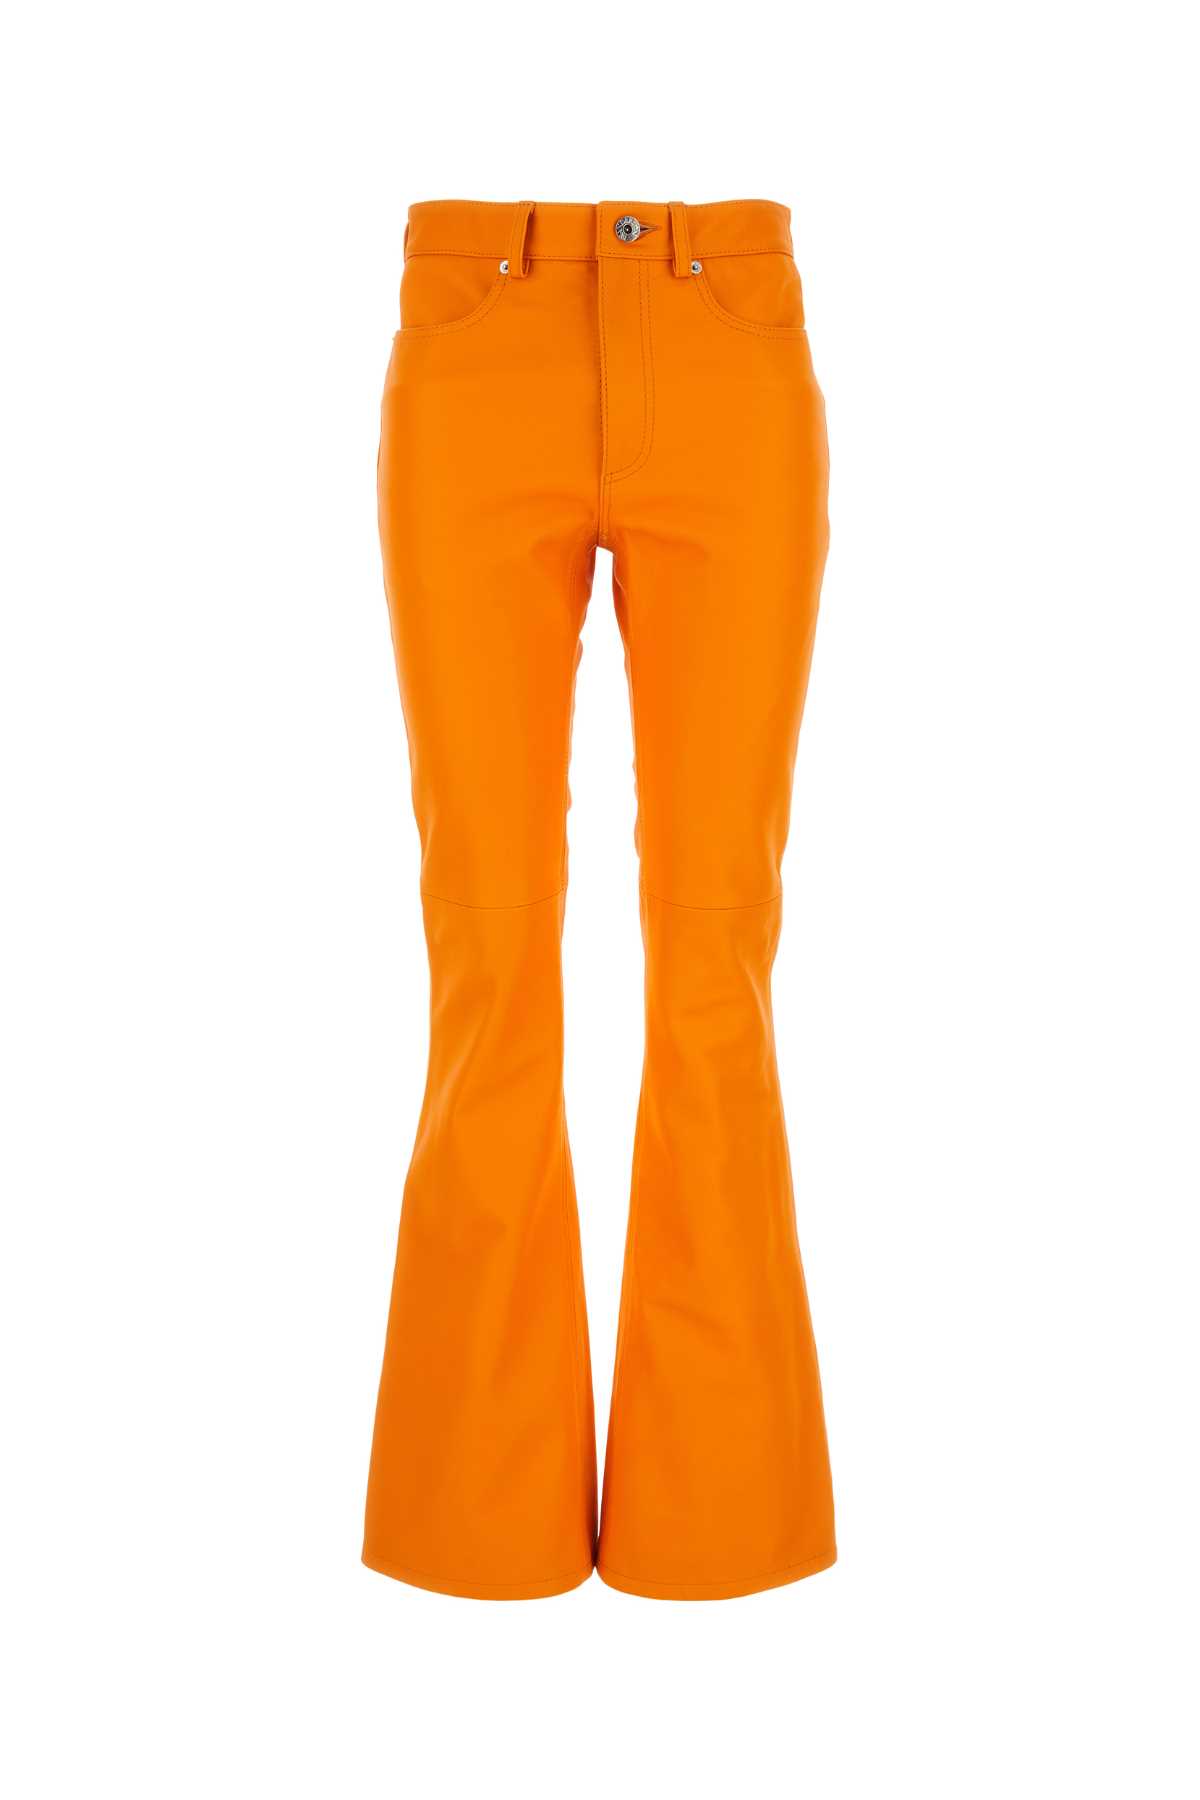 J.W. Anderson Orange Leather Pant